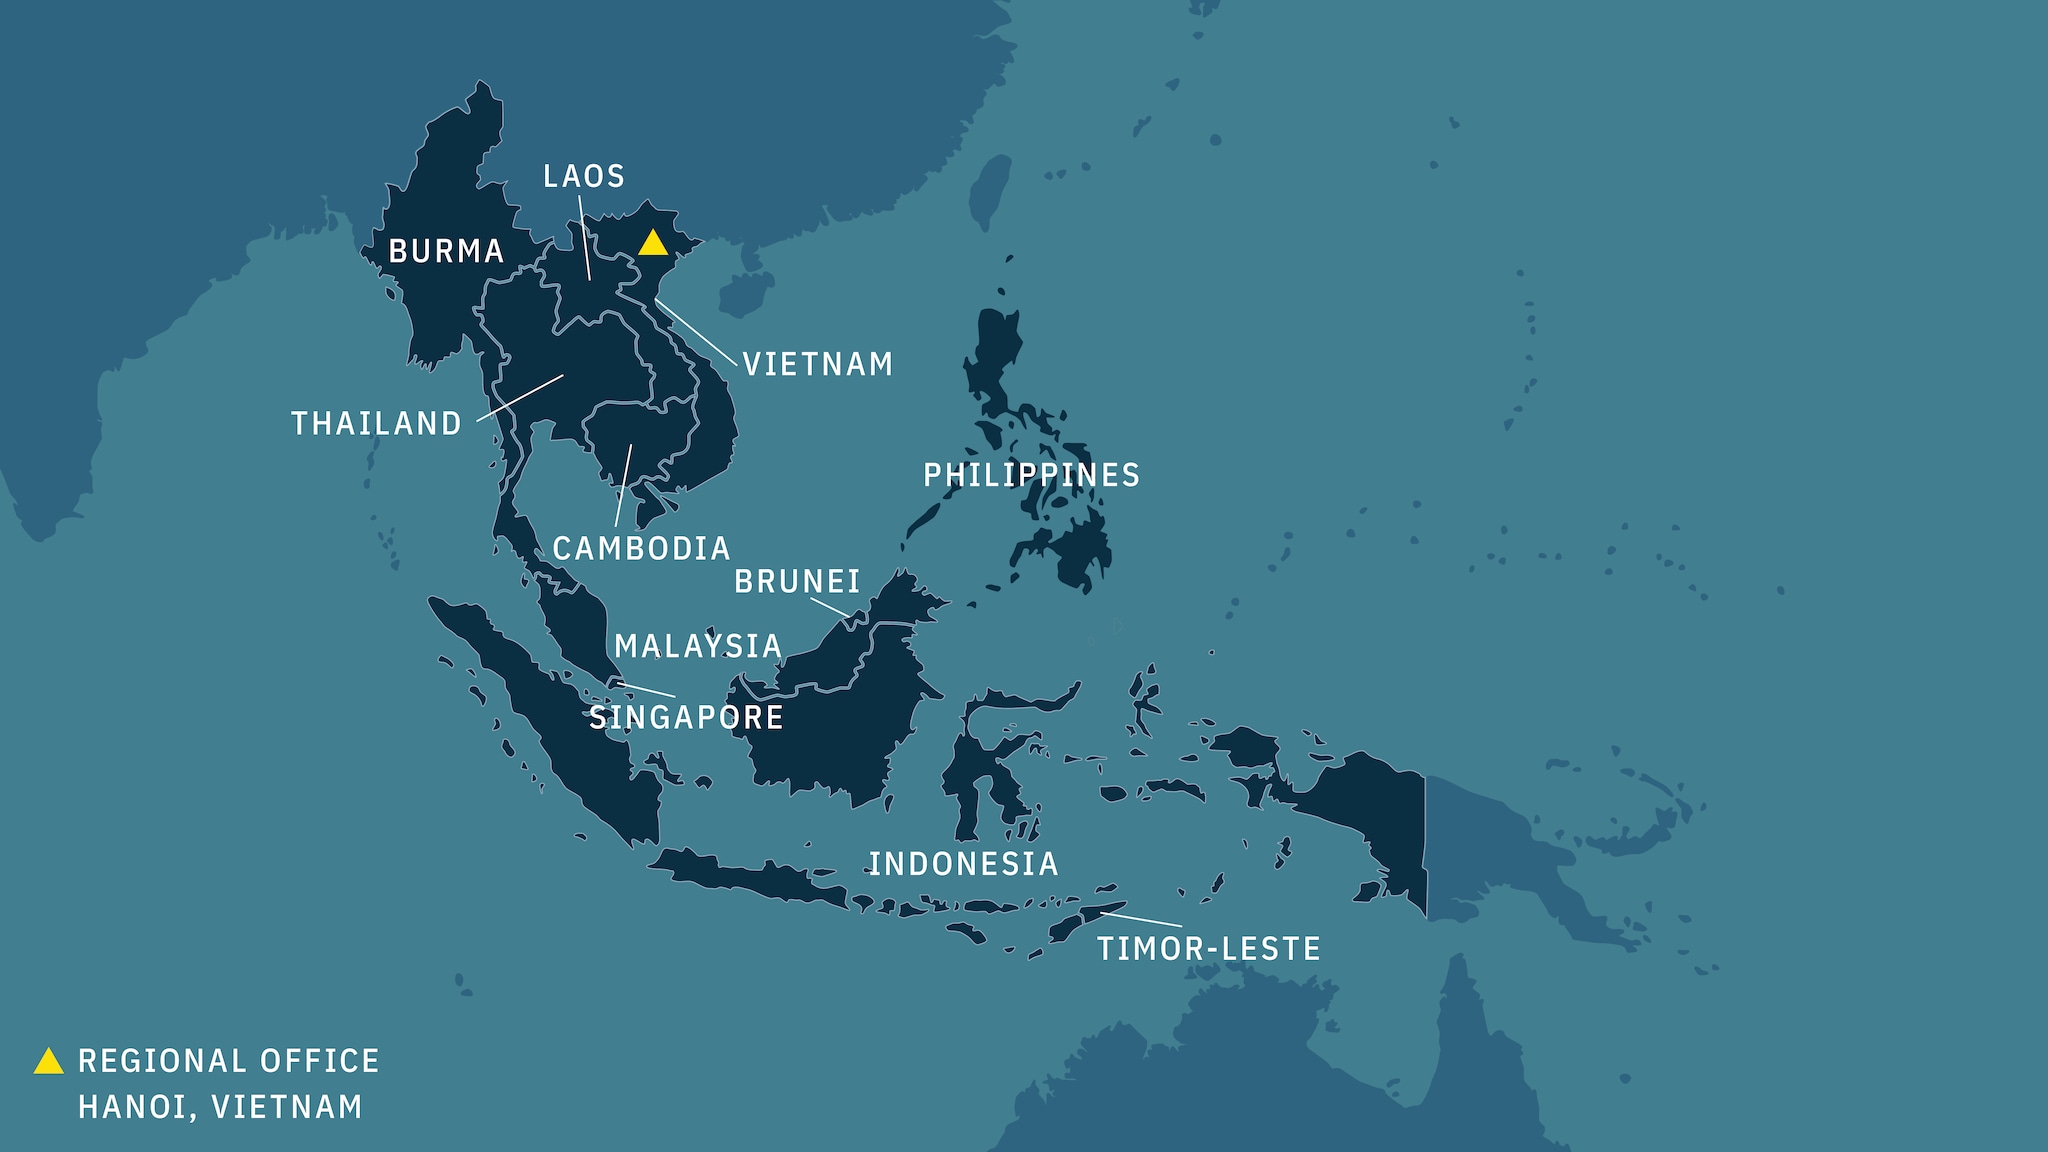 Countries included in the region: Brunei, Cambodia, Indonesia, Laos, Malaysia, Burma, Philippines, Singapore, Thailand, Timor-Leste, Vietnam